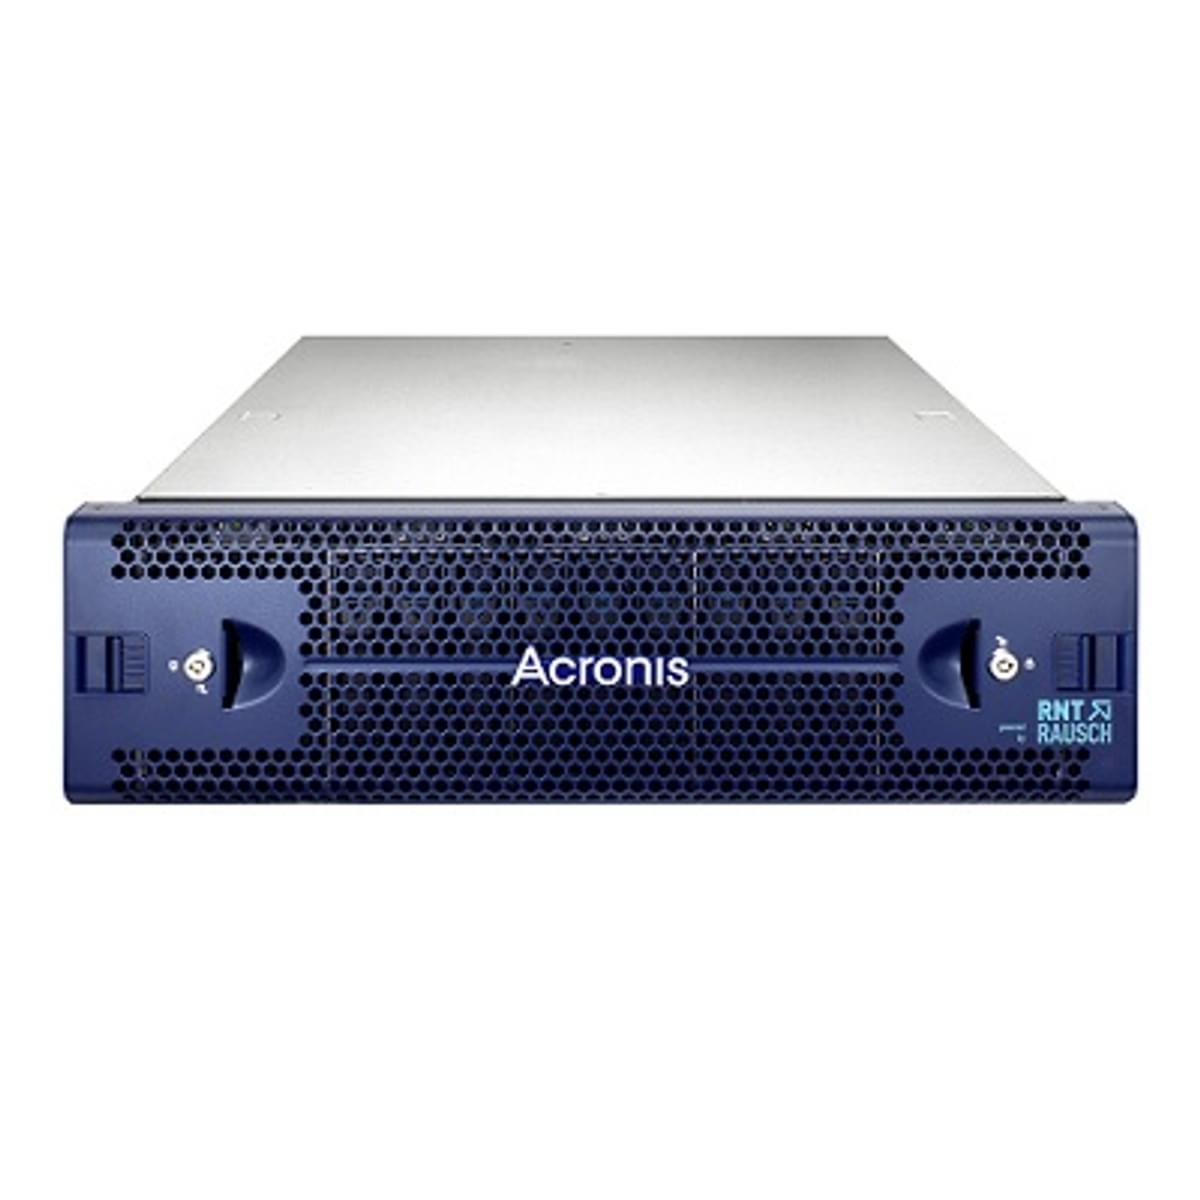 Acronis introduceert SDI Appliance image